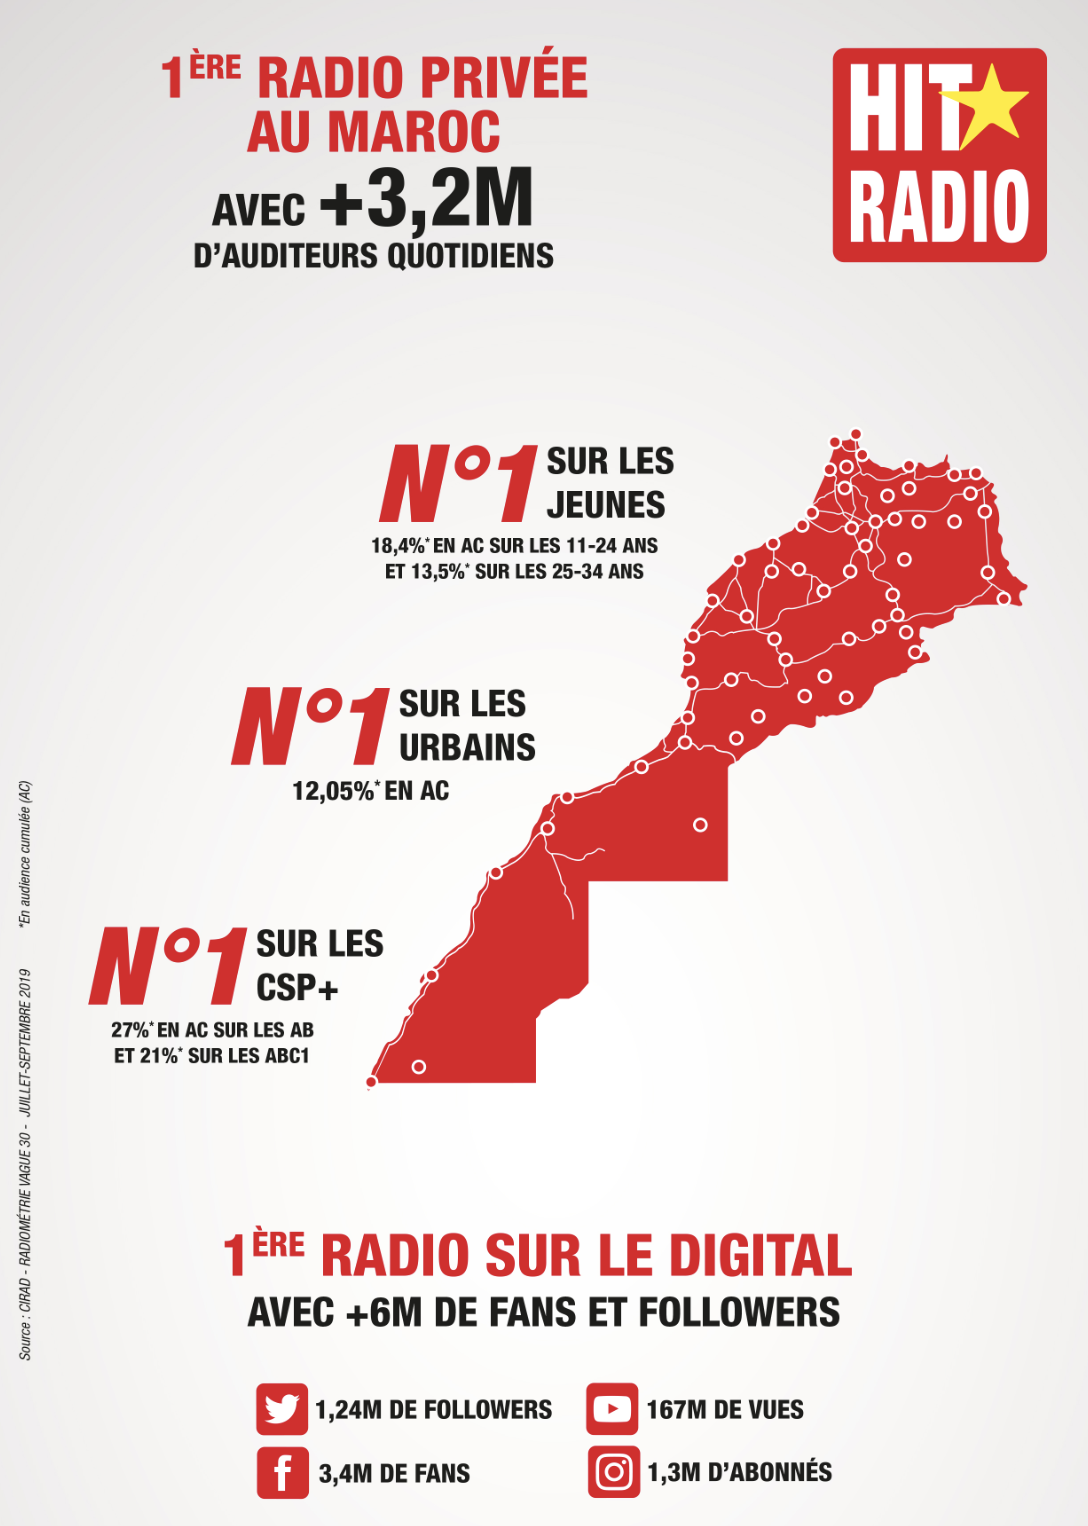 Hit Radio : première radio privée au Maroc